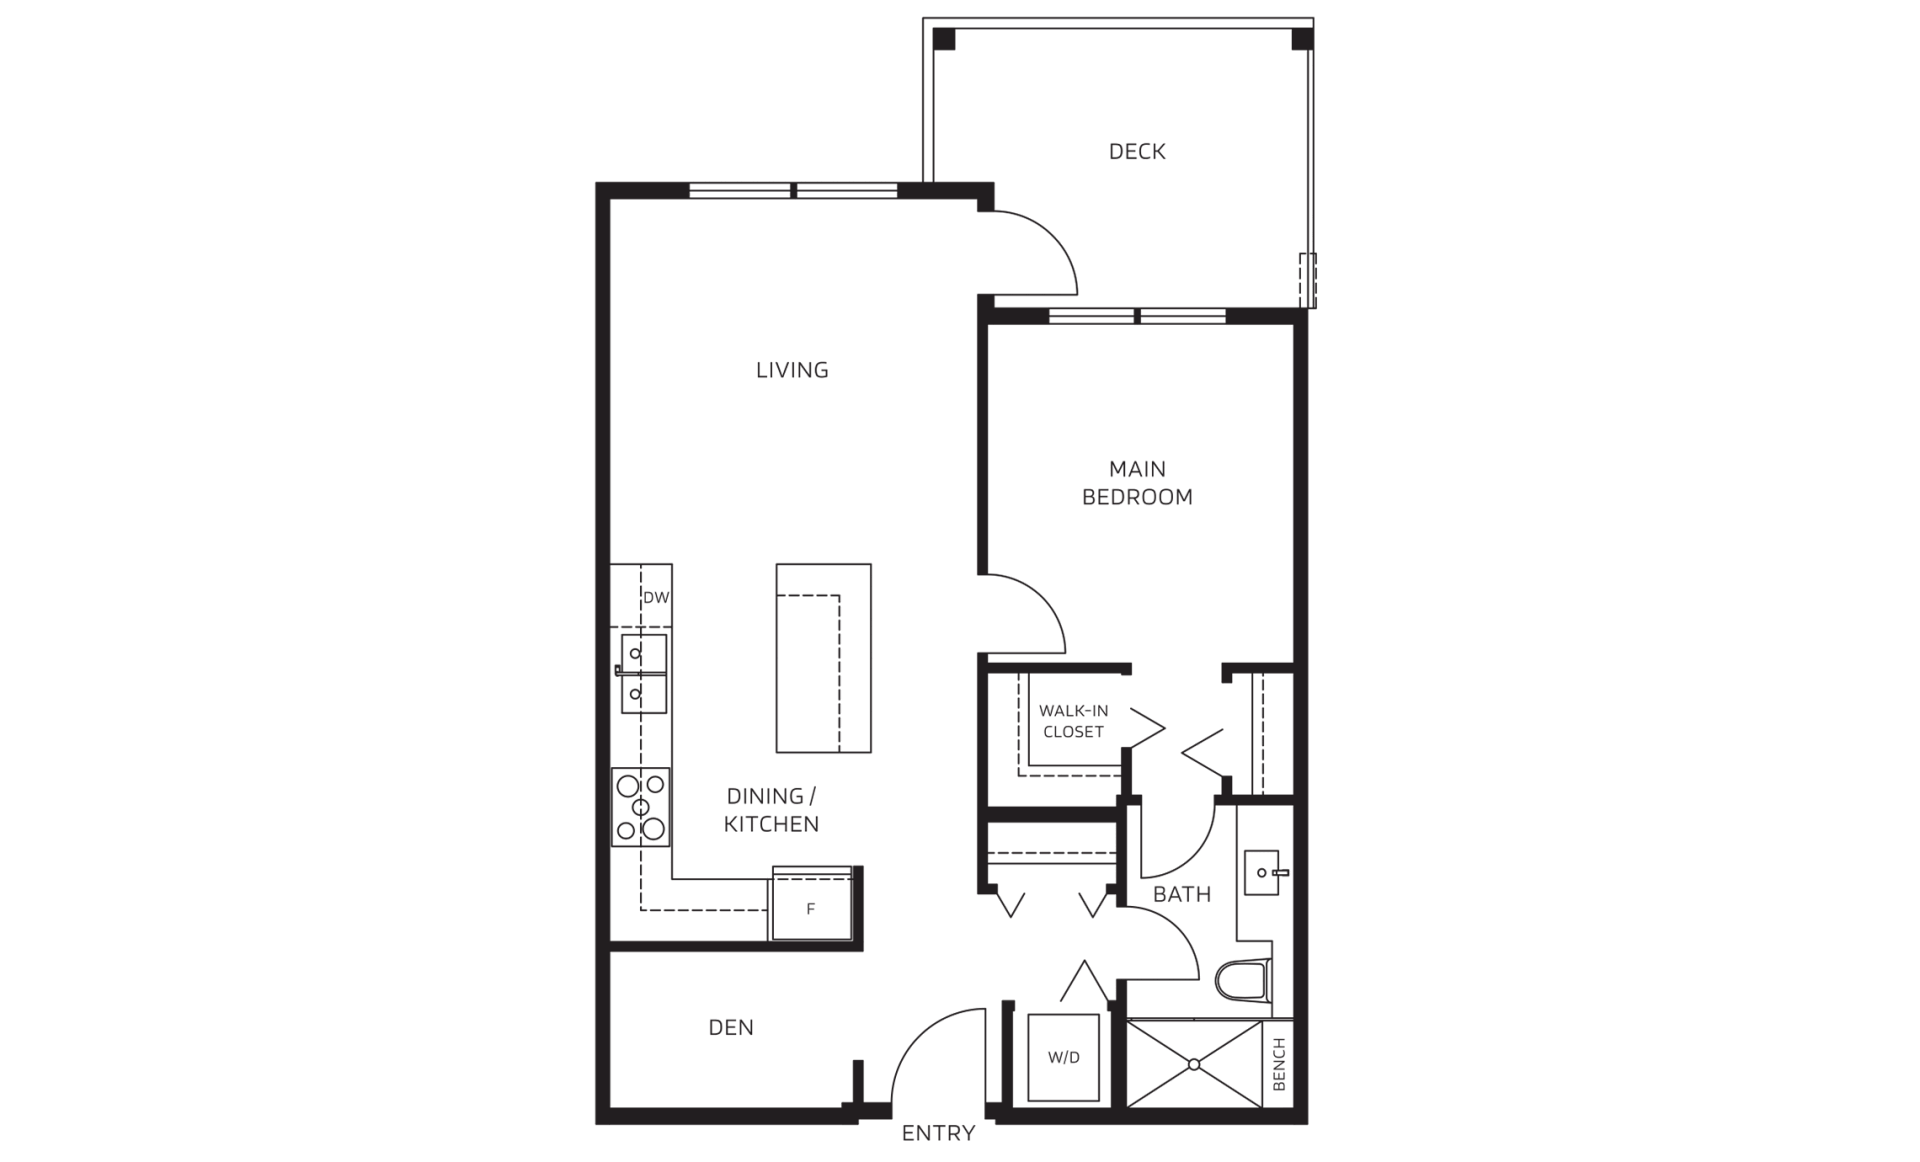  Floor Plan of Skylark Condos with undefined beds